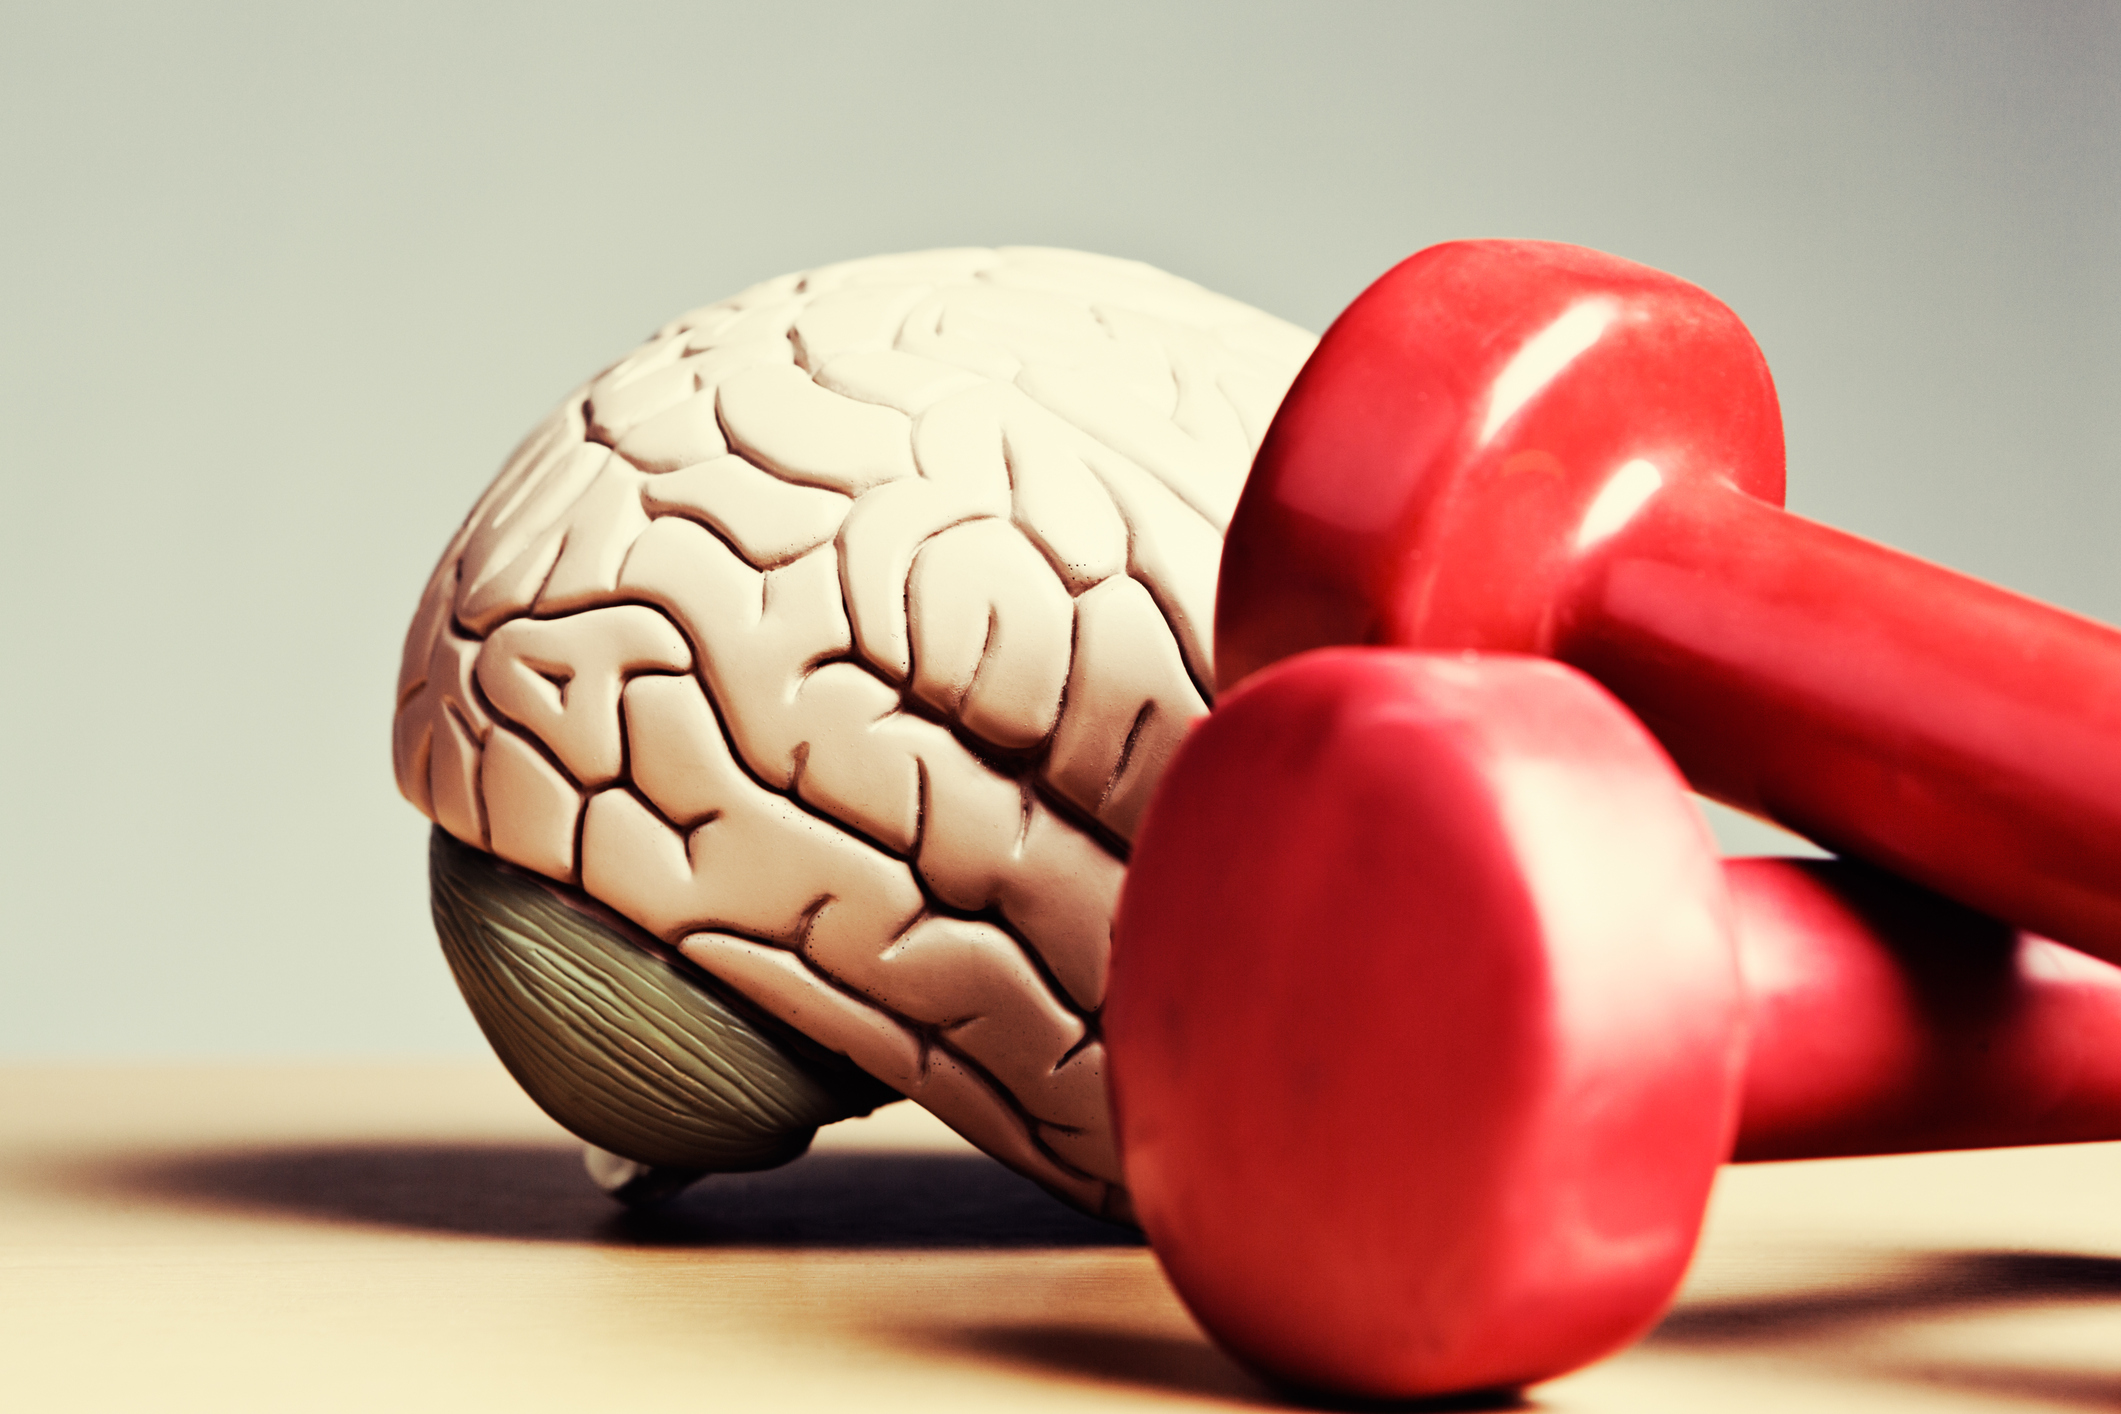 Brain and some. Мозг с боксерскими перчатками. Упражнения для мозга в картинках. Тренування мозку. Фитнес для мозга картинки.